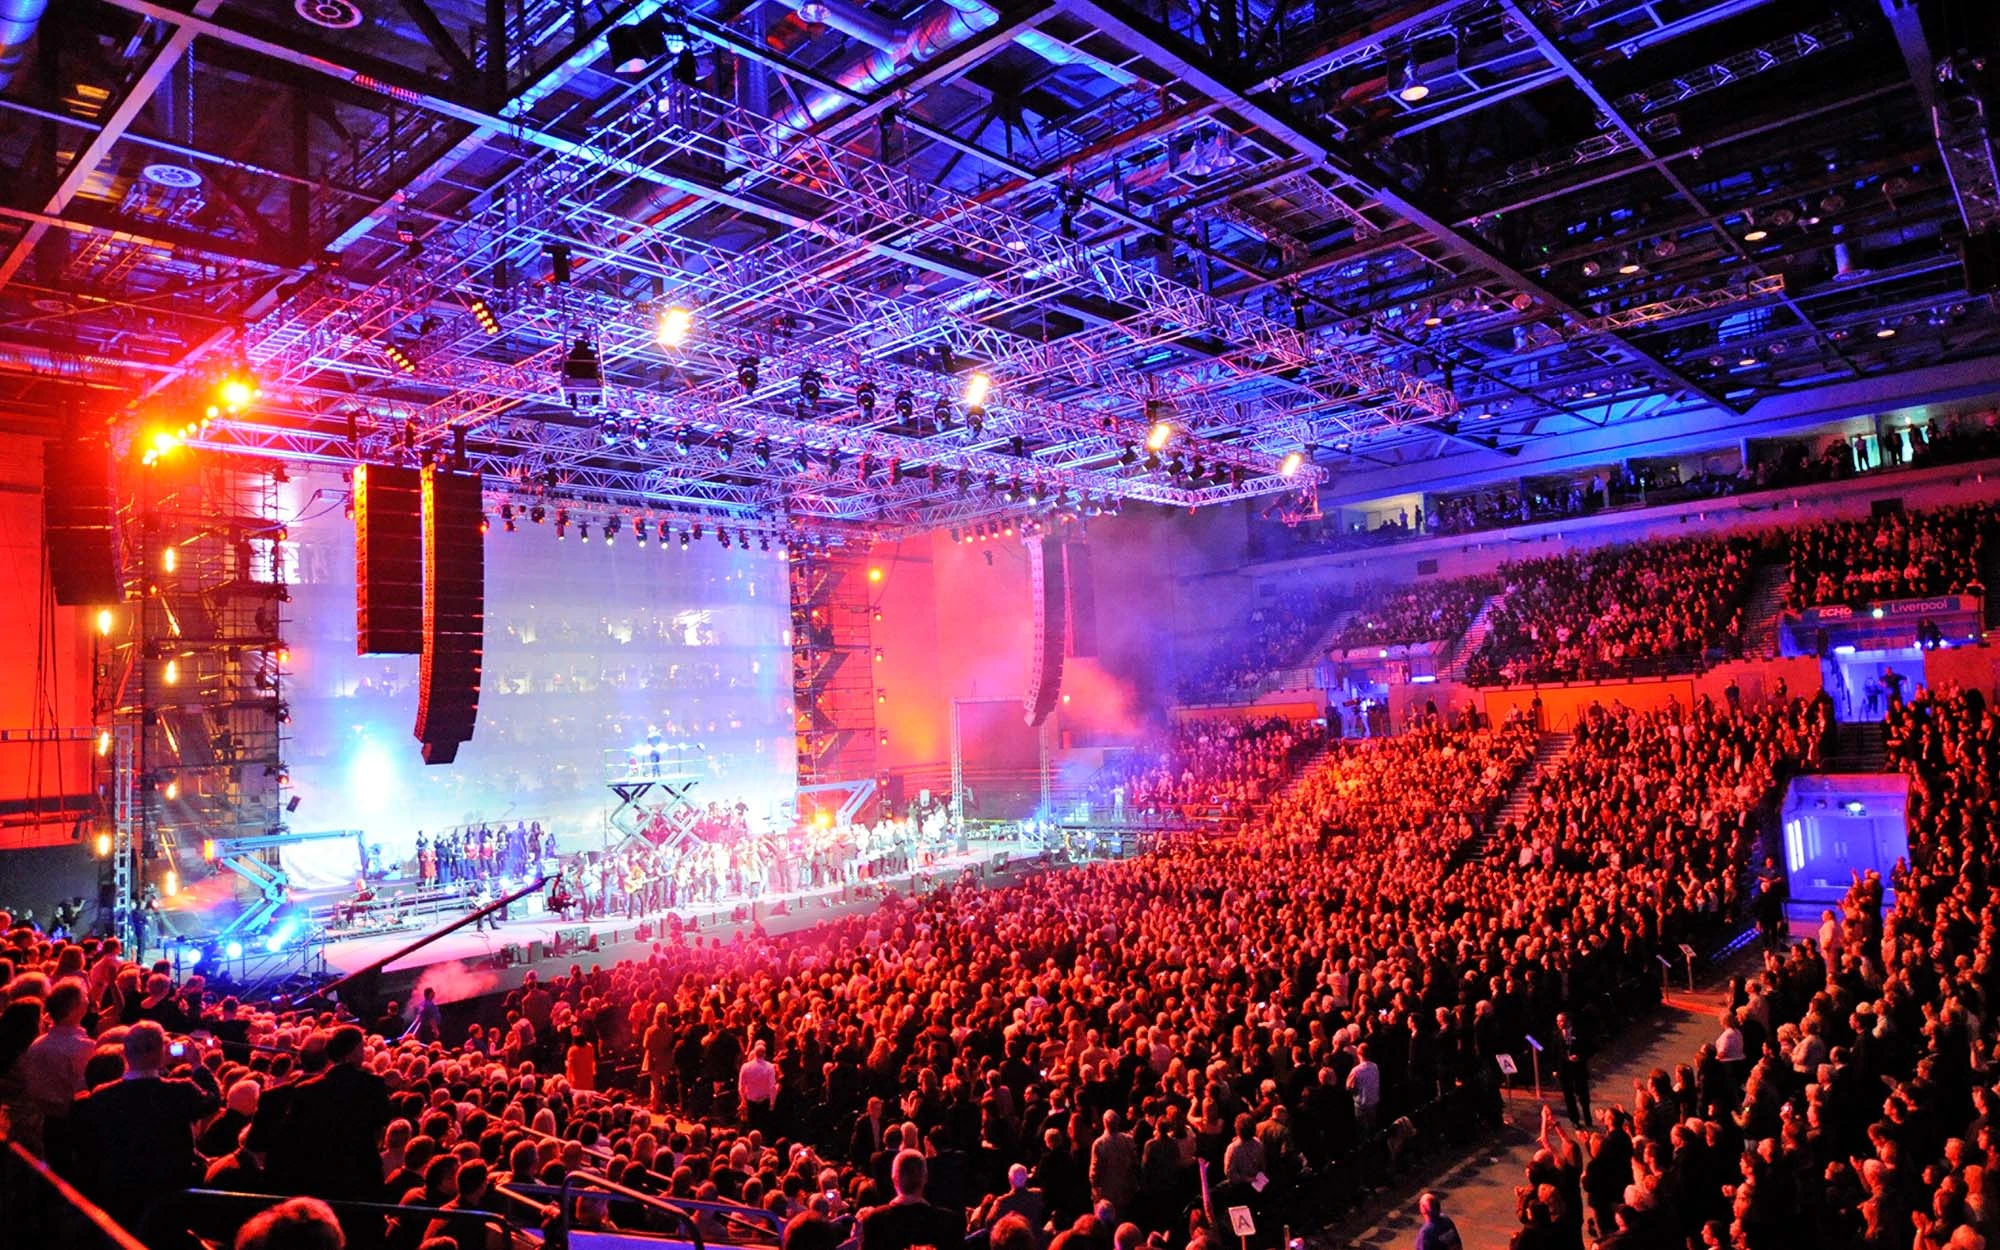 Interior of Liverpool Arena